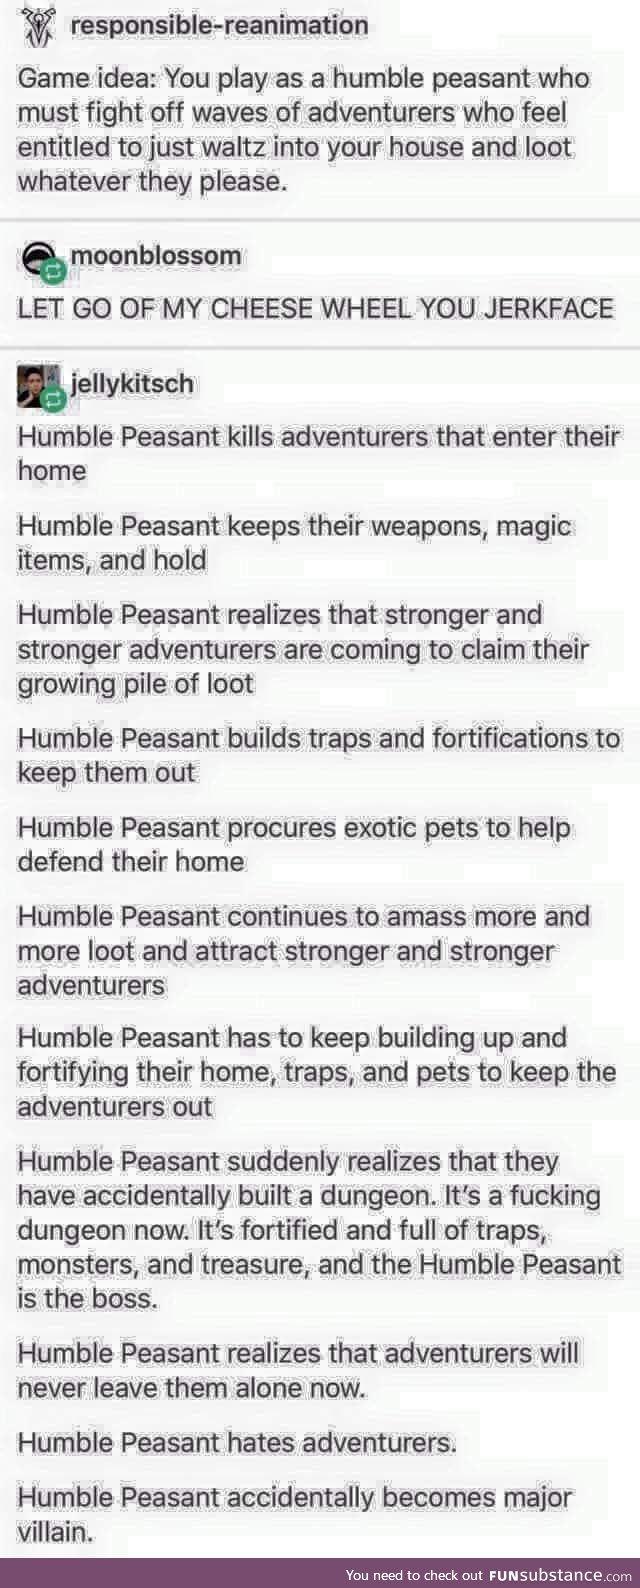 The humble peasant - an origin story